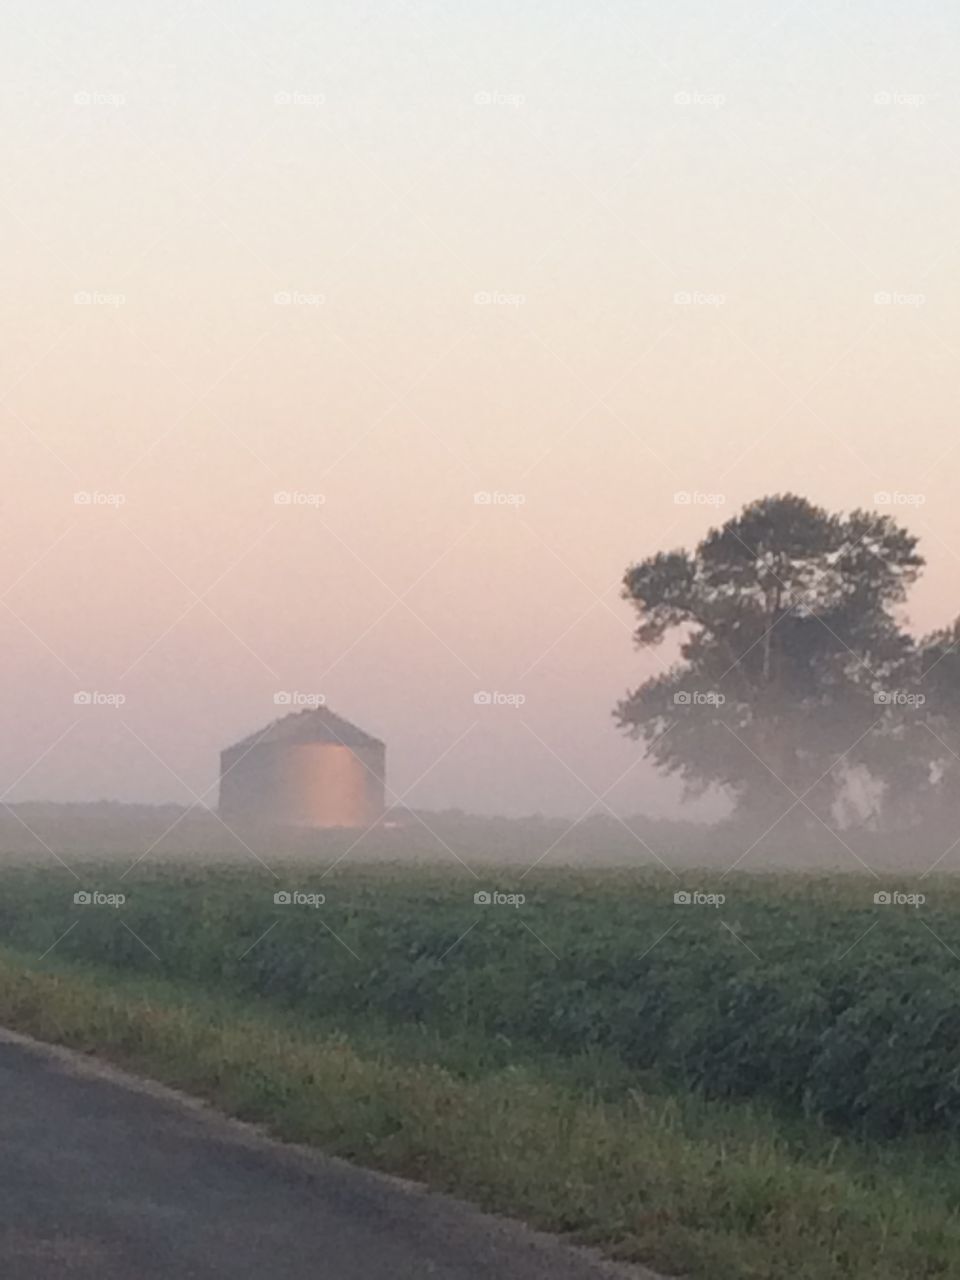 Grain silos in the foggy morning 